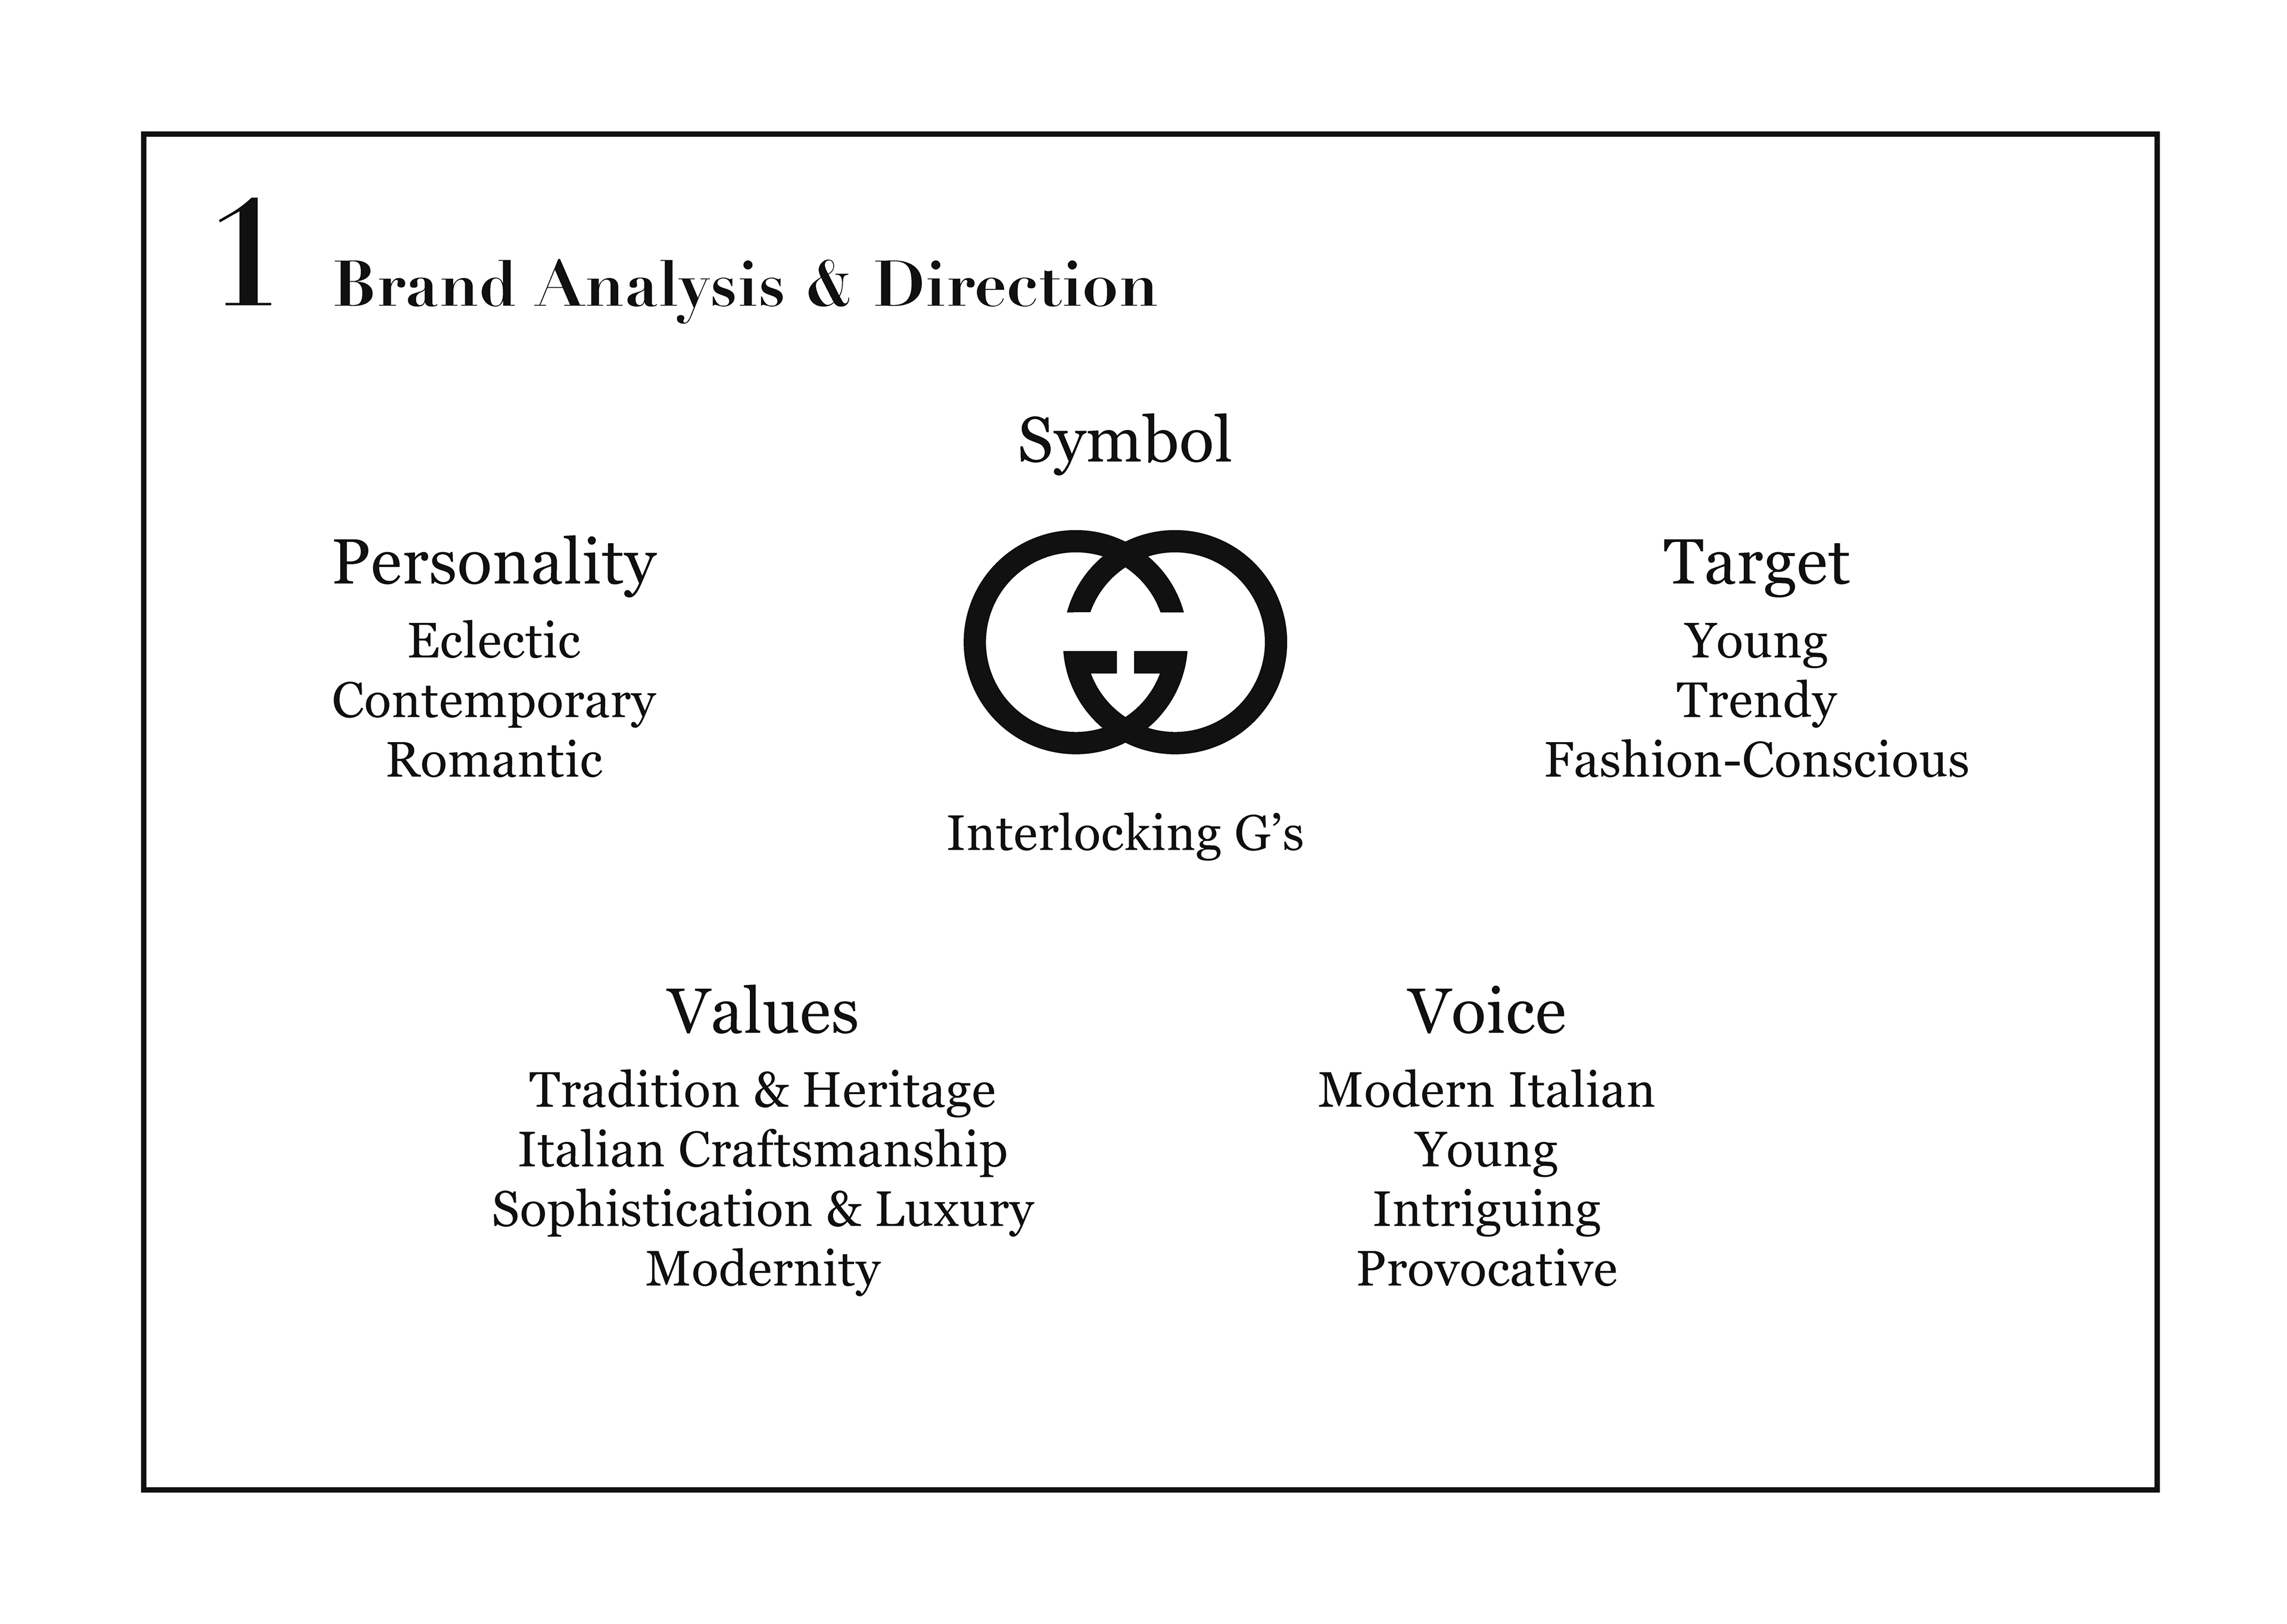 GUCCI Brand Analysis